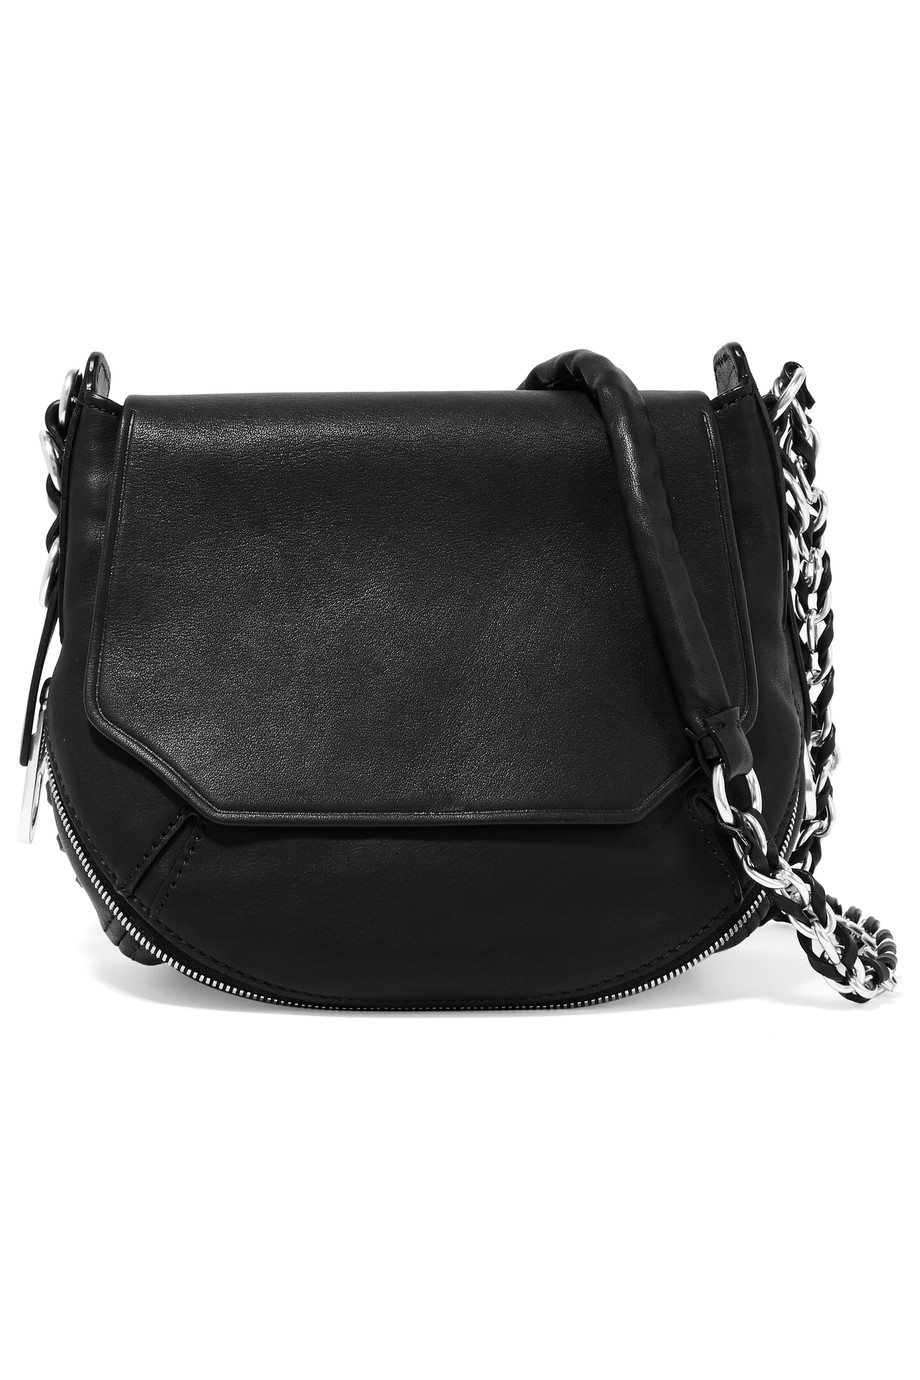 Rag & Bone Bradbury Leather Shoulder Bag | ModeSens